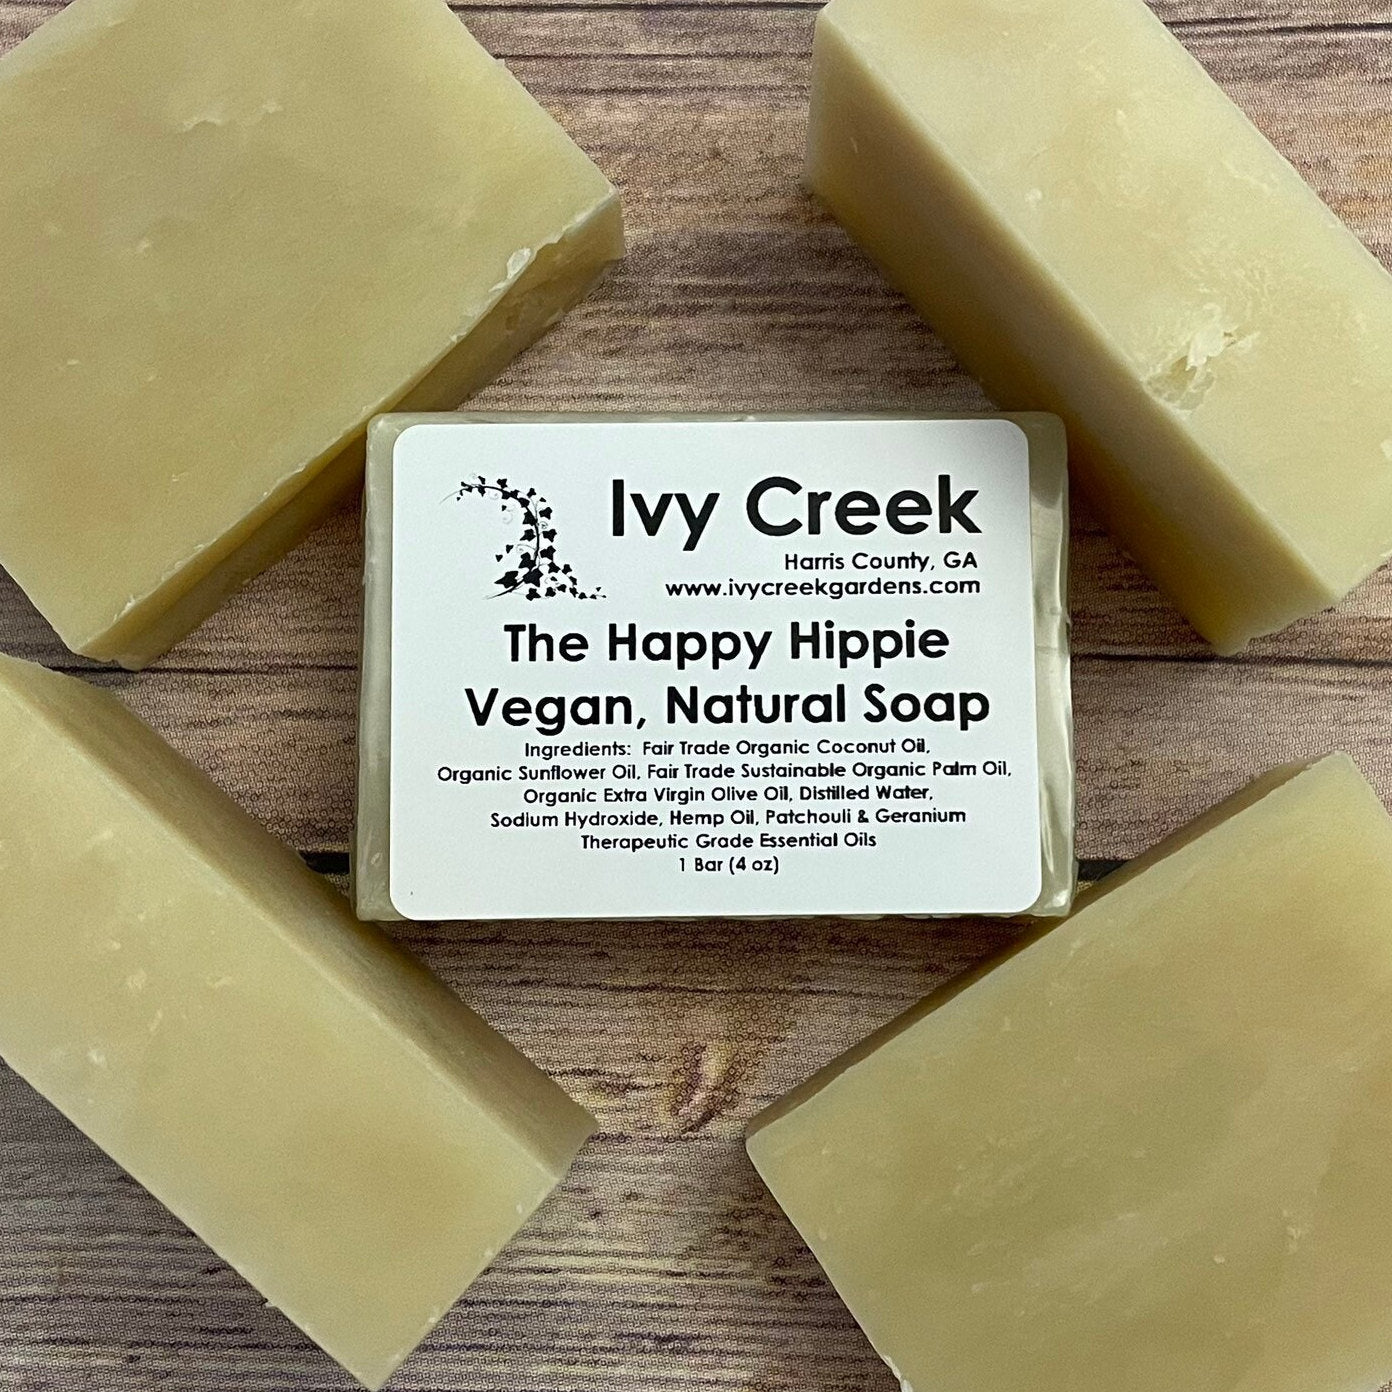 Ivy Creek The Happy Hippie Vegan Soap | Patchouli and Geranium Scented Natural Soap - 4 oz bar soap